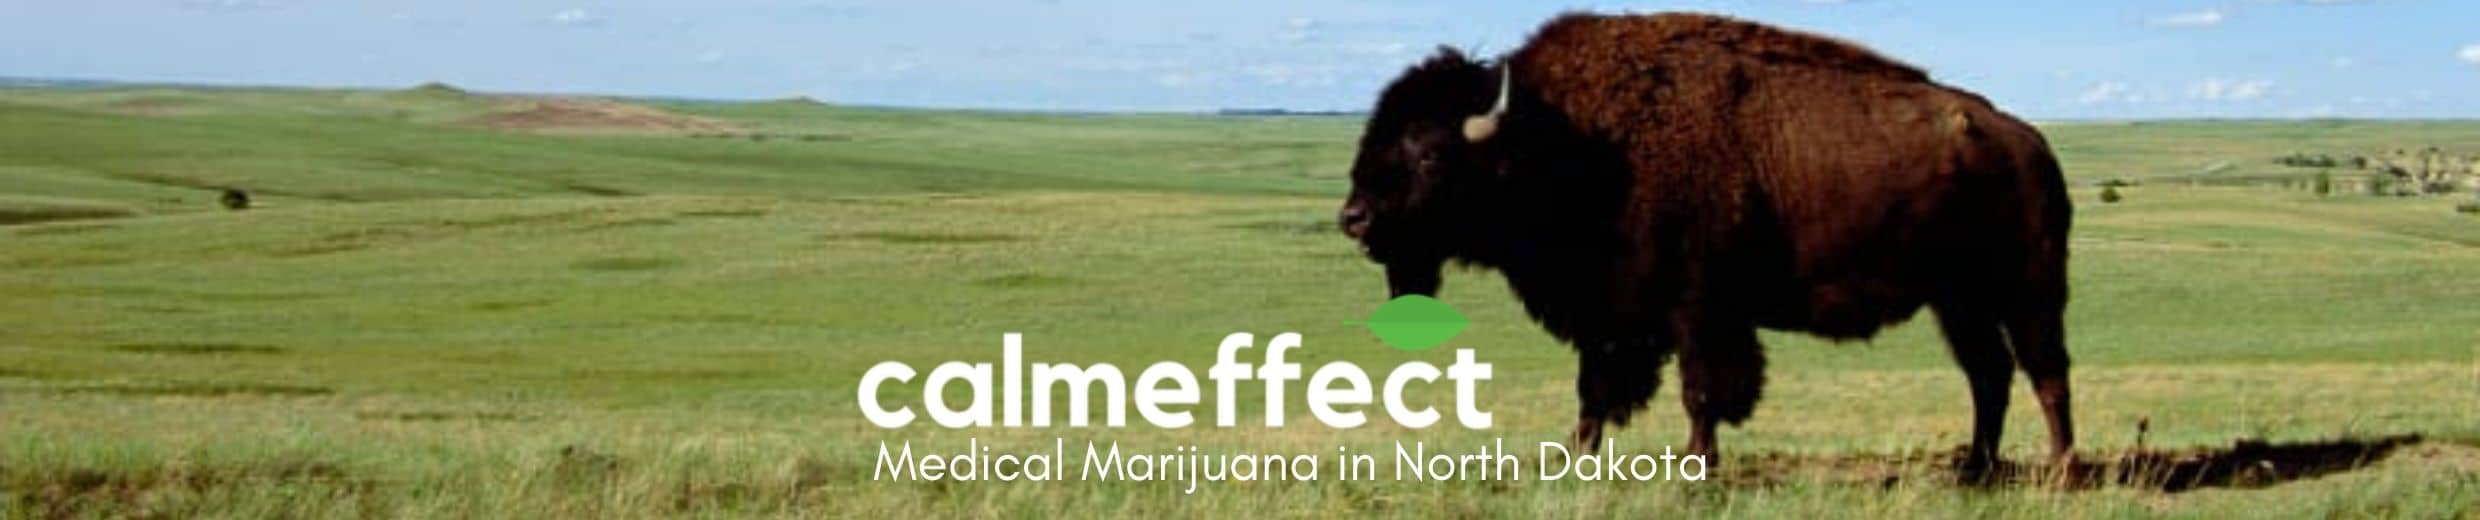 Medical Marijuana in North Dakota